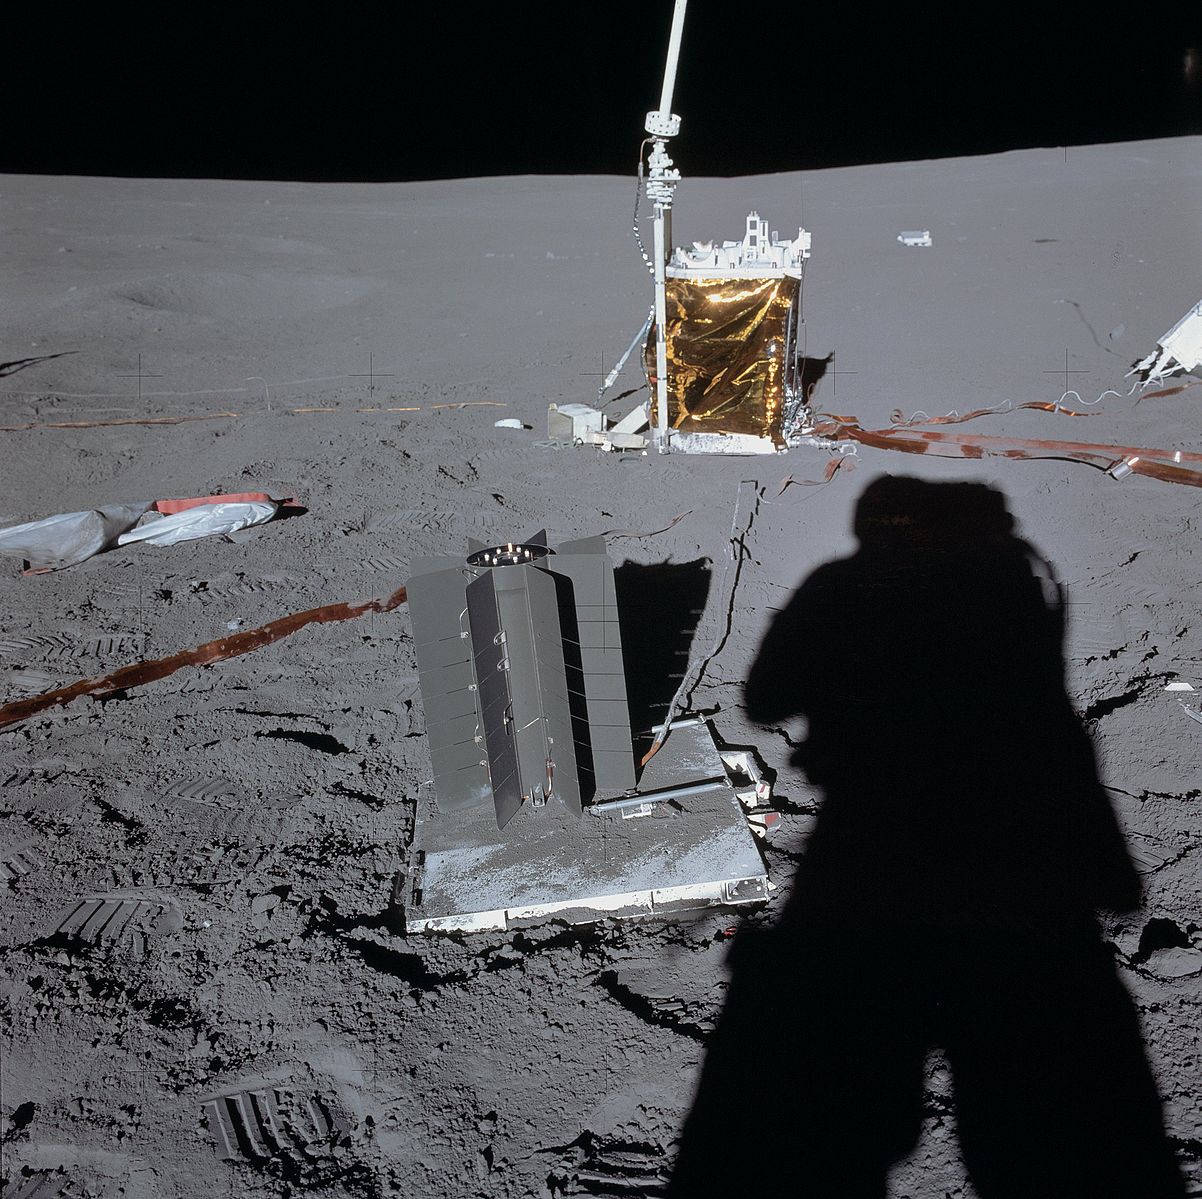 ALSEP deployed on the lunar surface